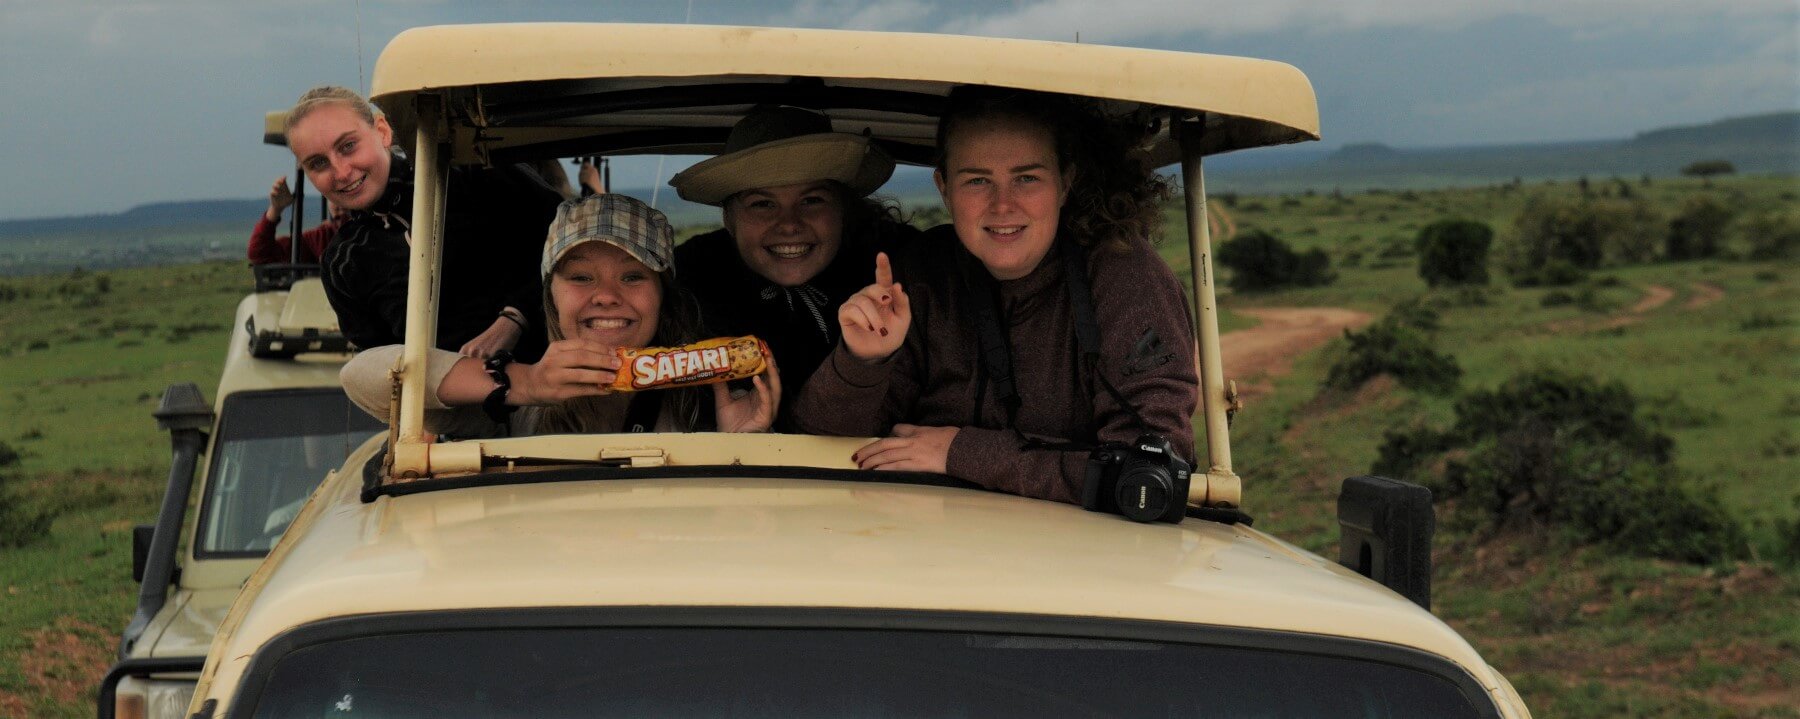 Elever i bil på safari viser frem pakke med Safari-kjeks